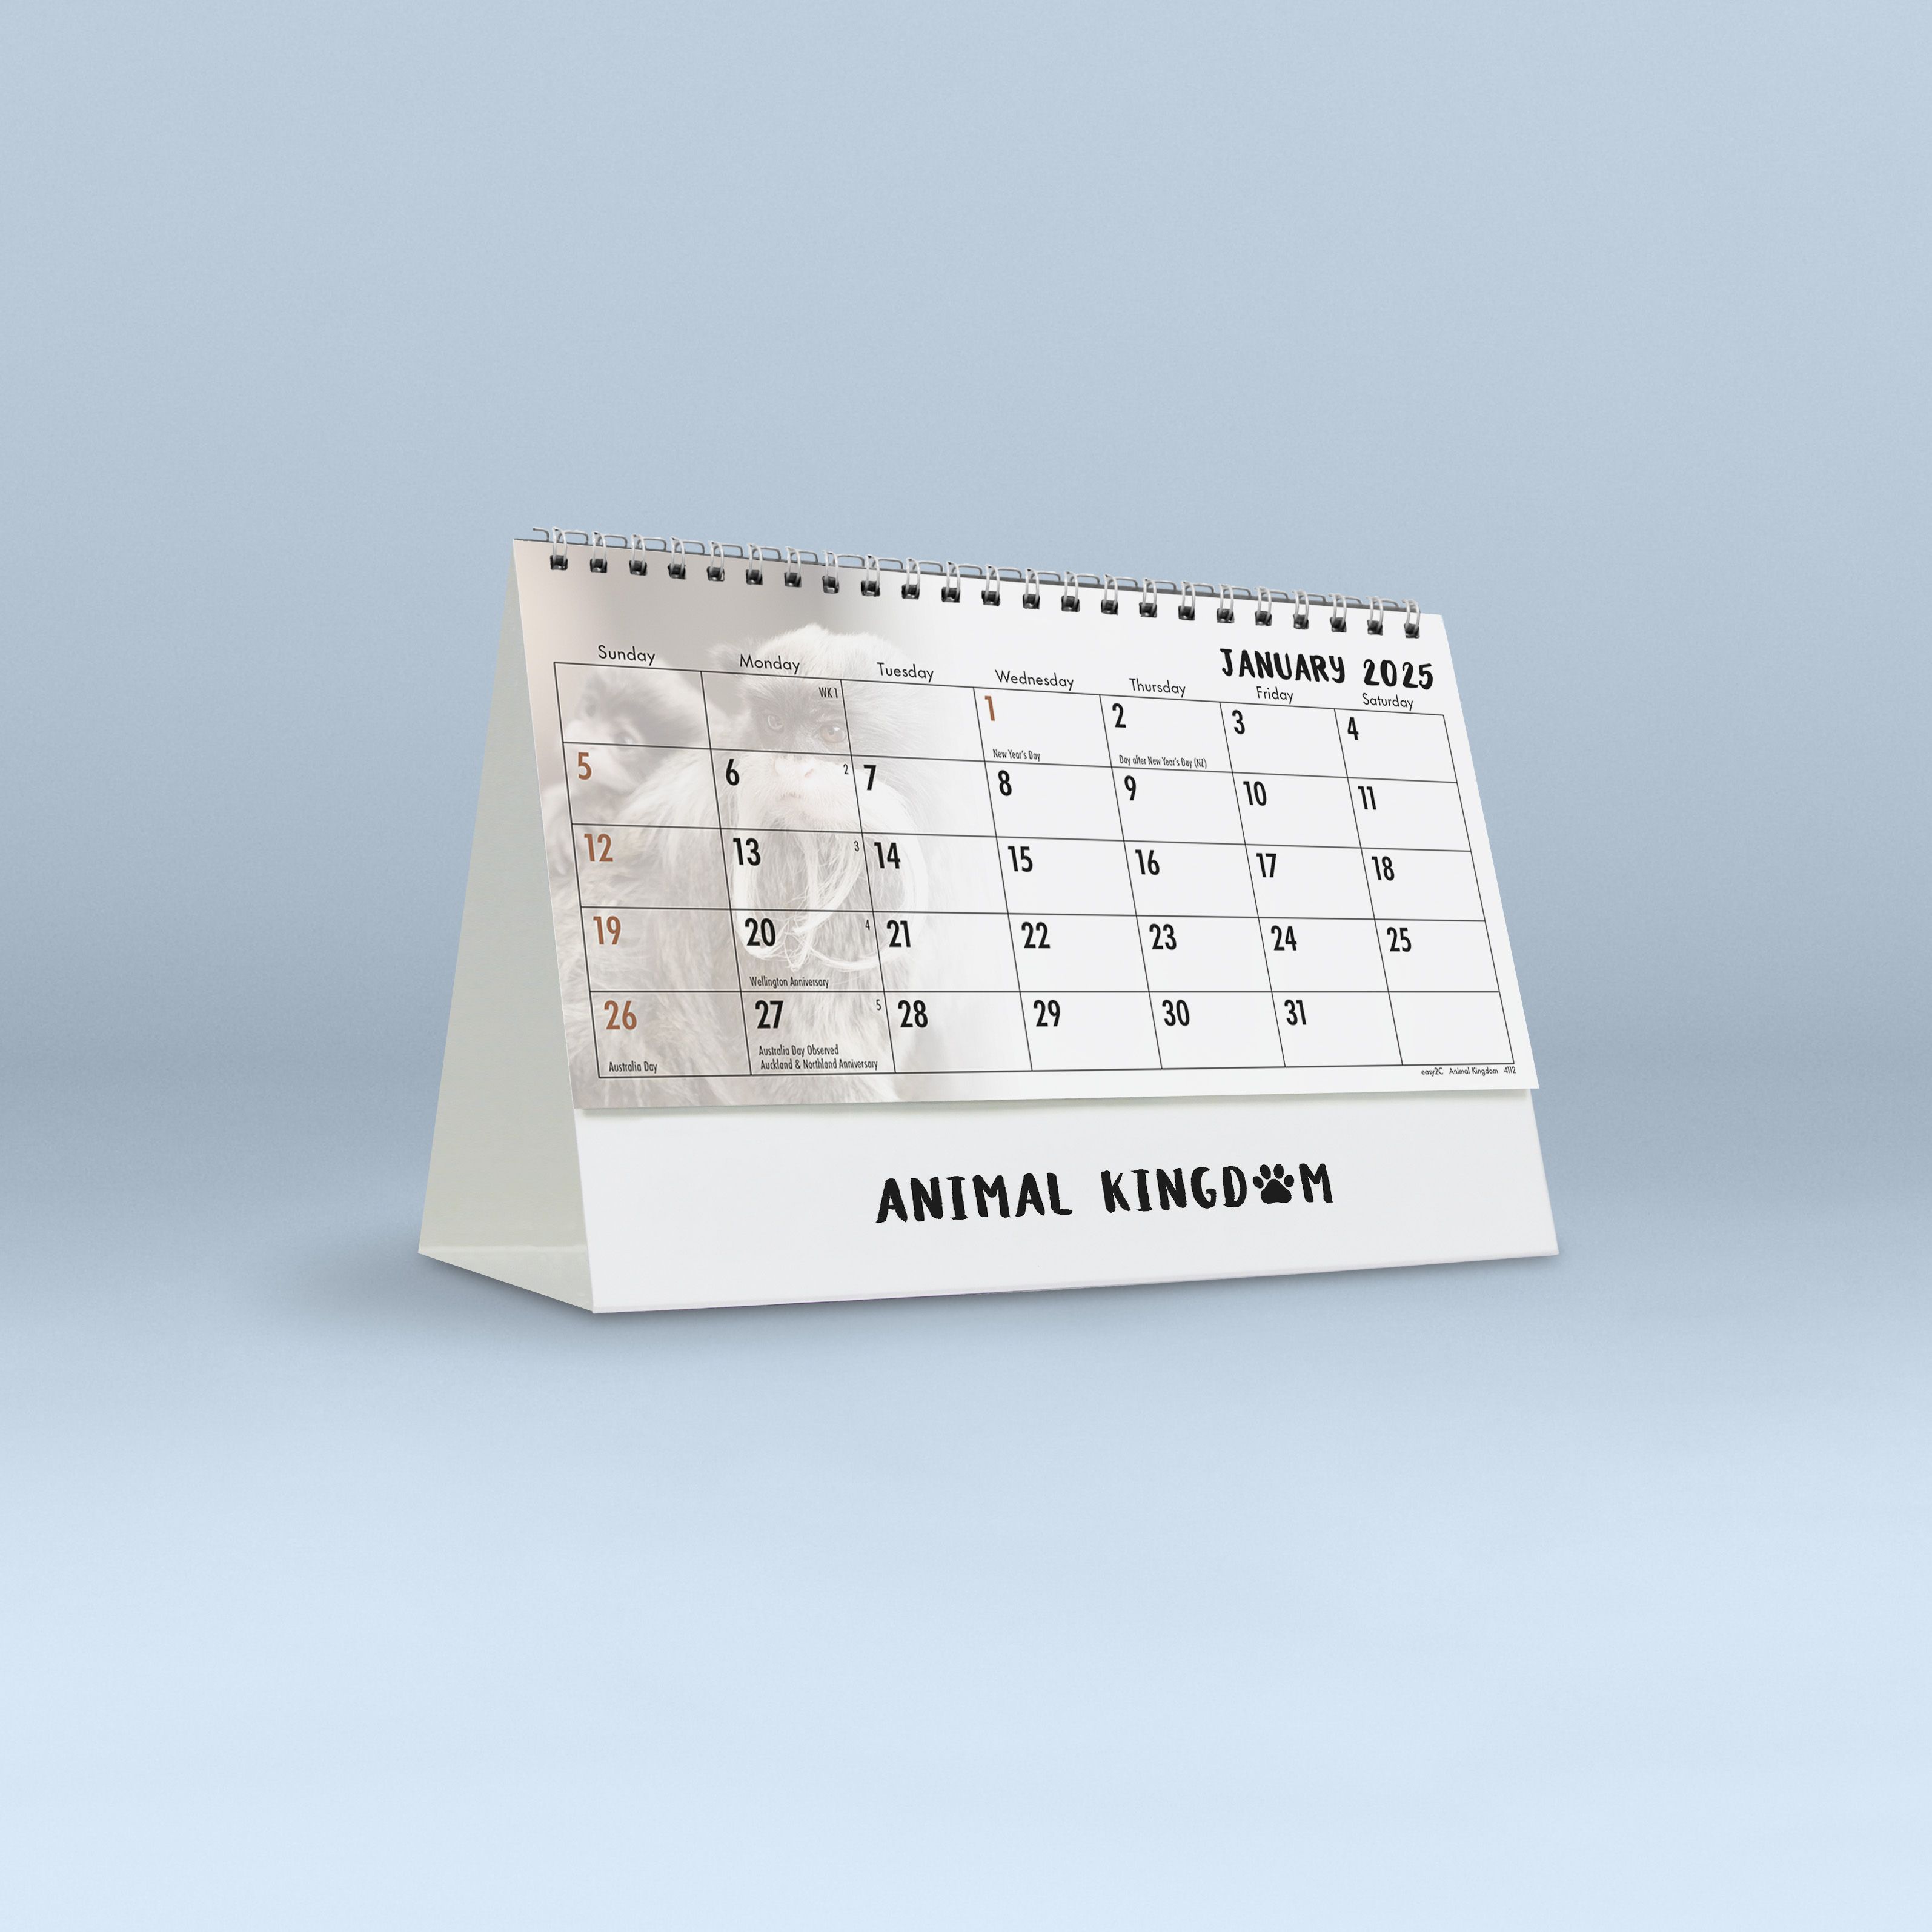 Animal Kingdom_4257_25_01